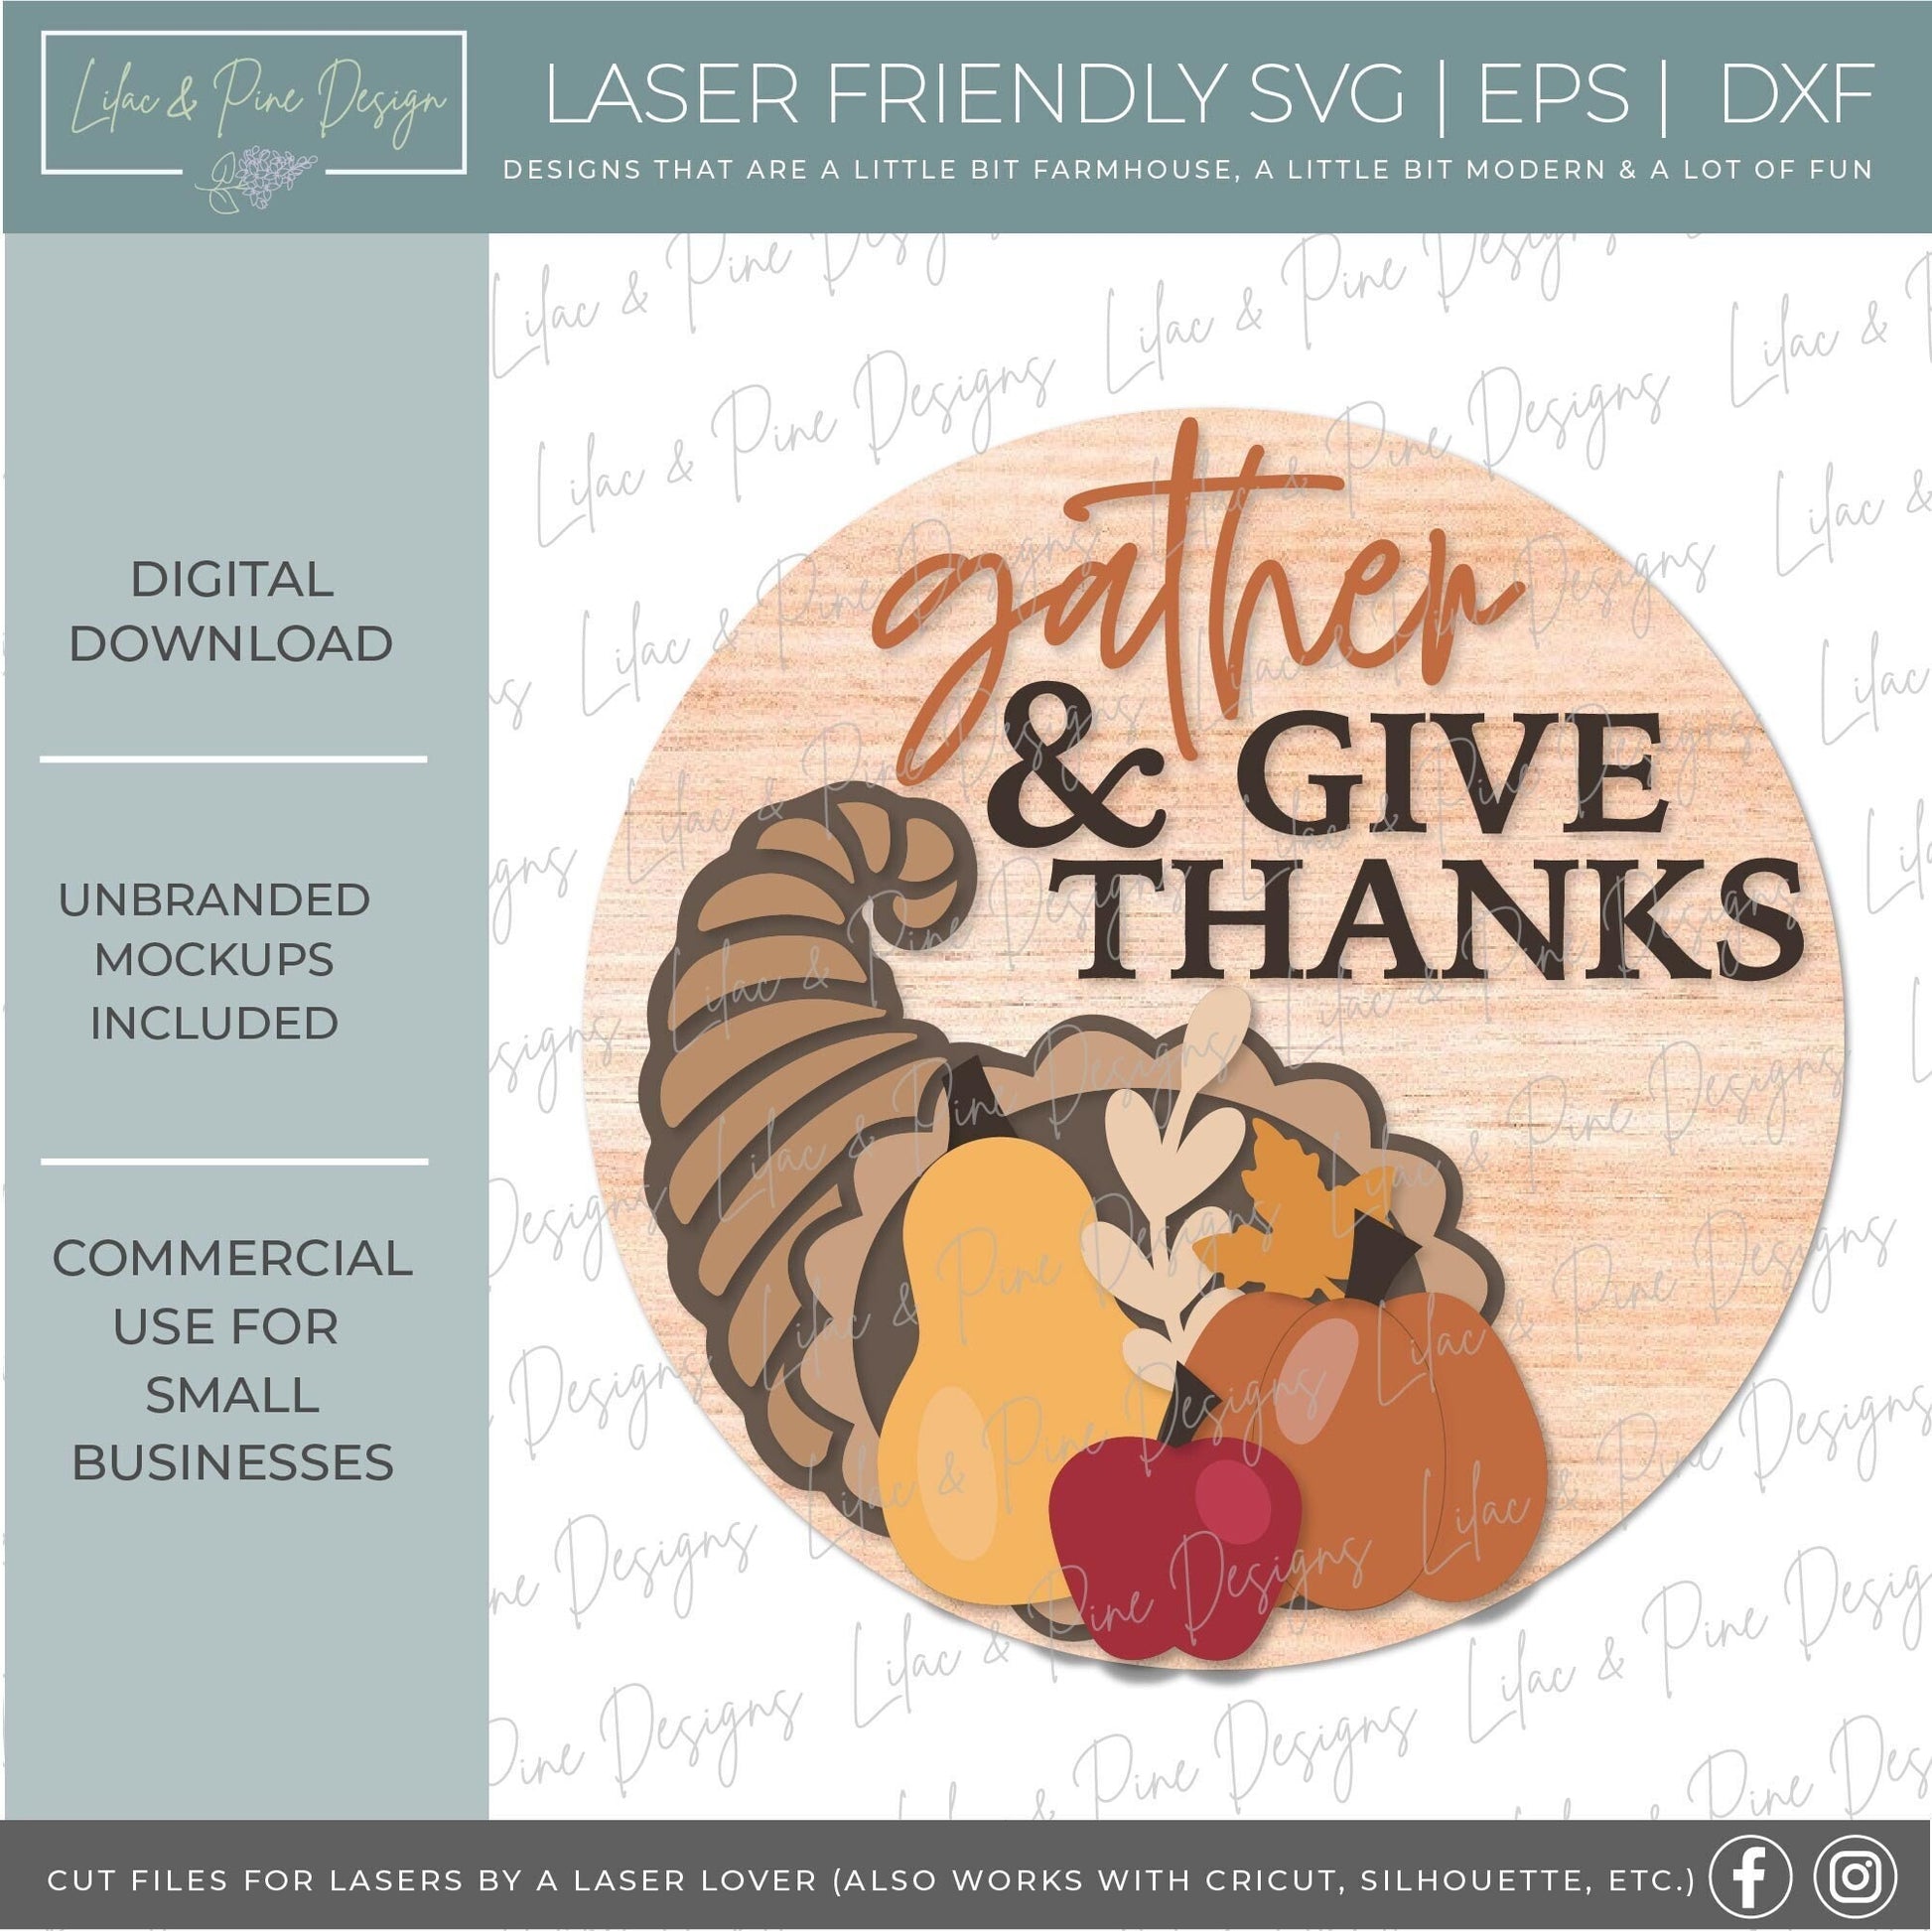 Thanksgiving door hanger SVG, Gather and give thanks sign SVG, Cornucopia welcome sign, round sign design, Glowforge SVG, laser cut file